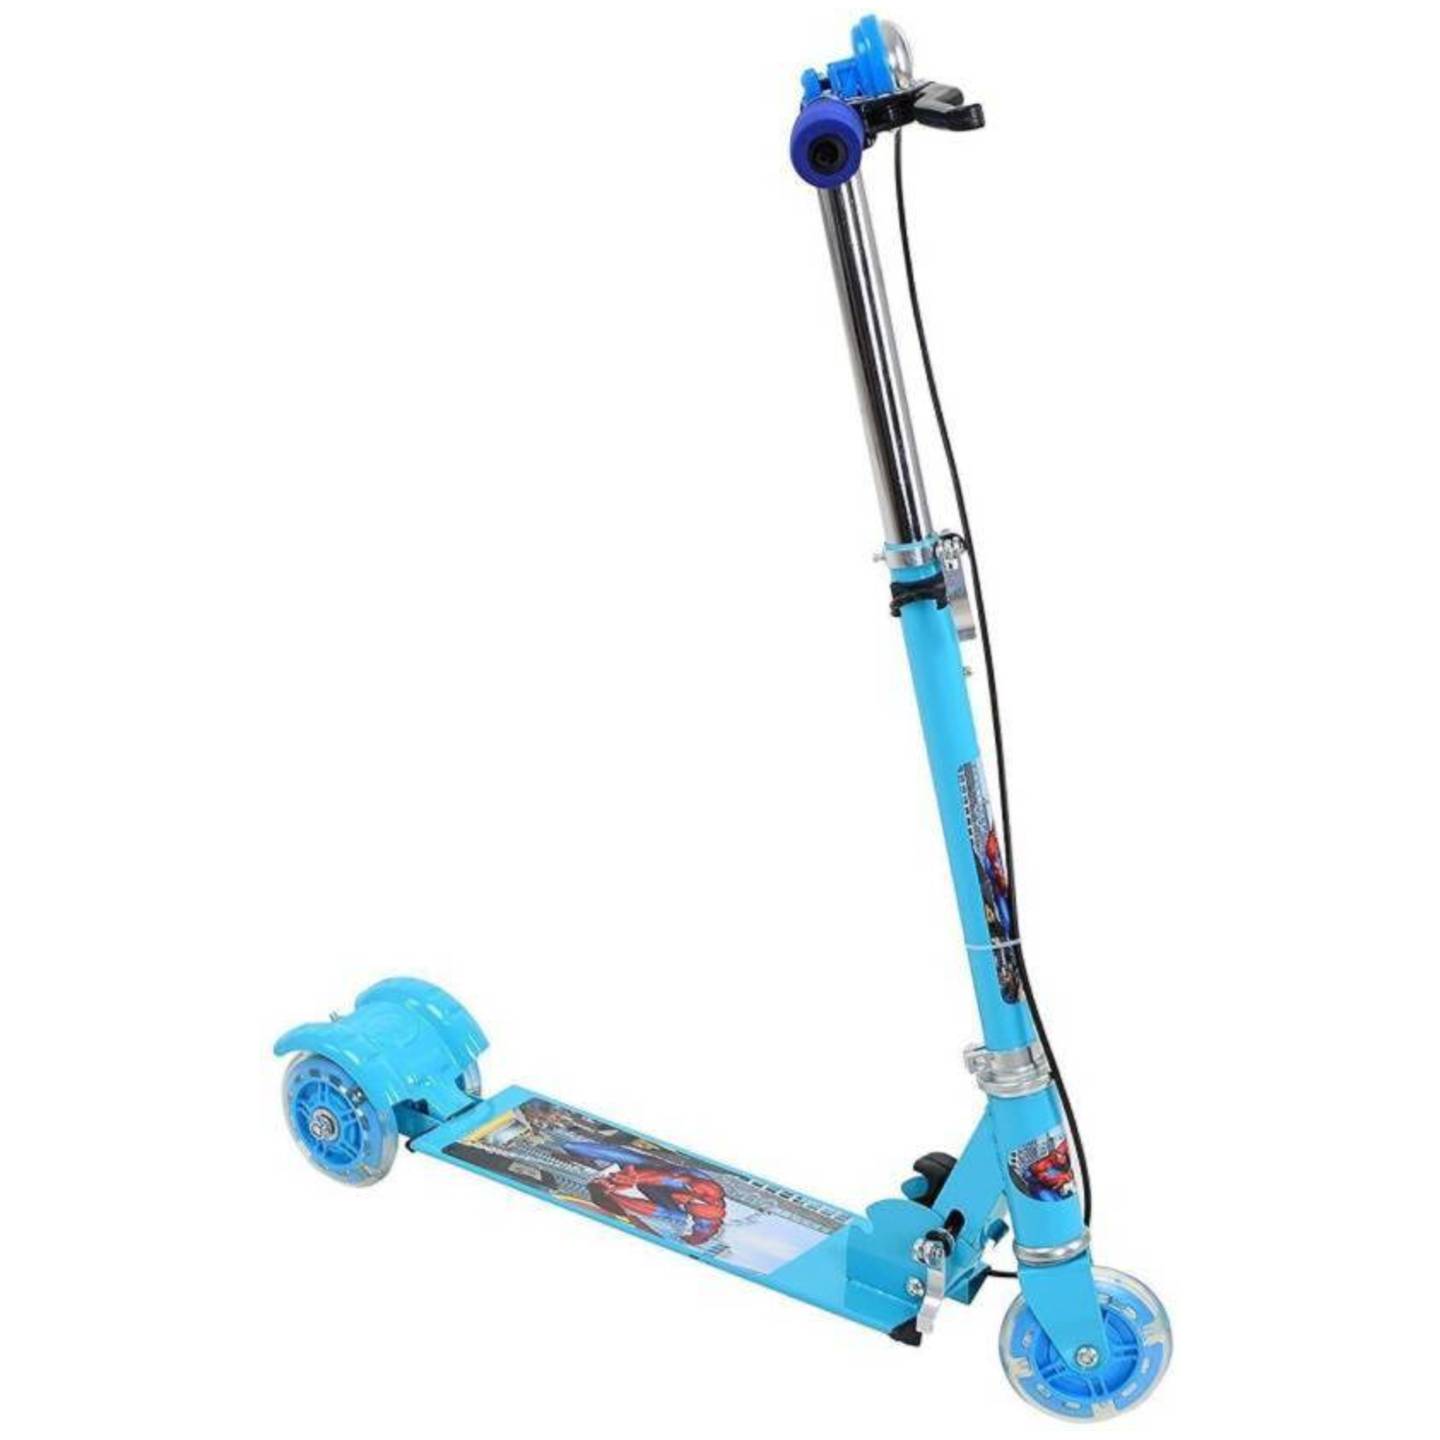 kids-foldable-3-wheel-scooter-cycle-hariom-enterprise-original-imaff5khynmdujbz.jpeg